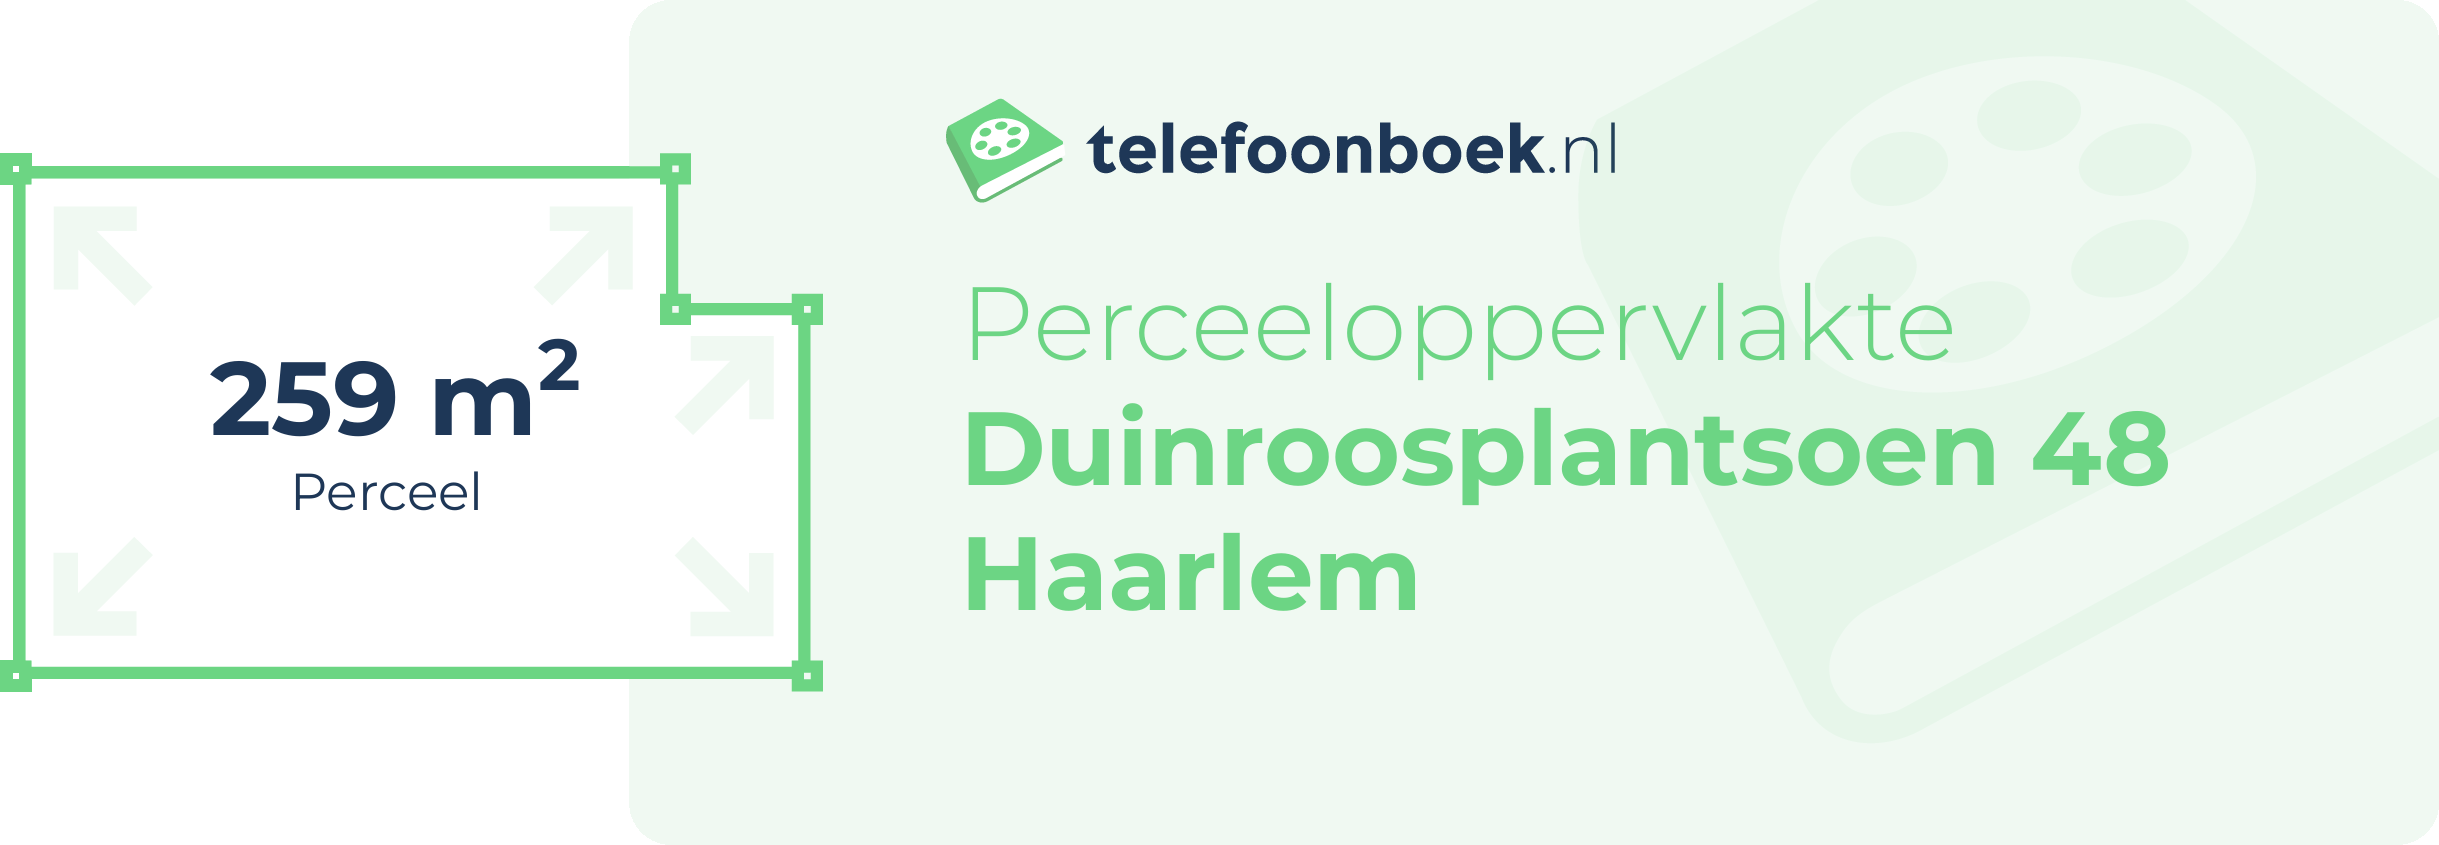 Perceeloppervlakte Duinroosplantsoen 48 Haarlem